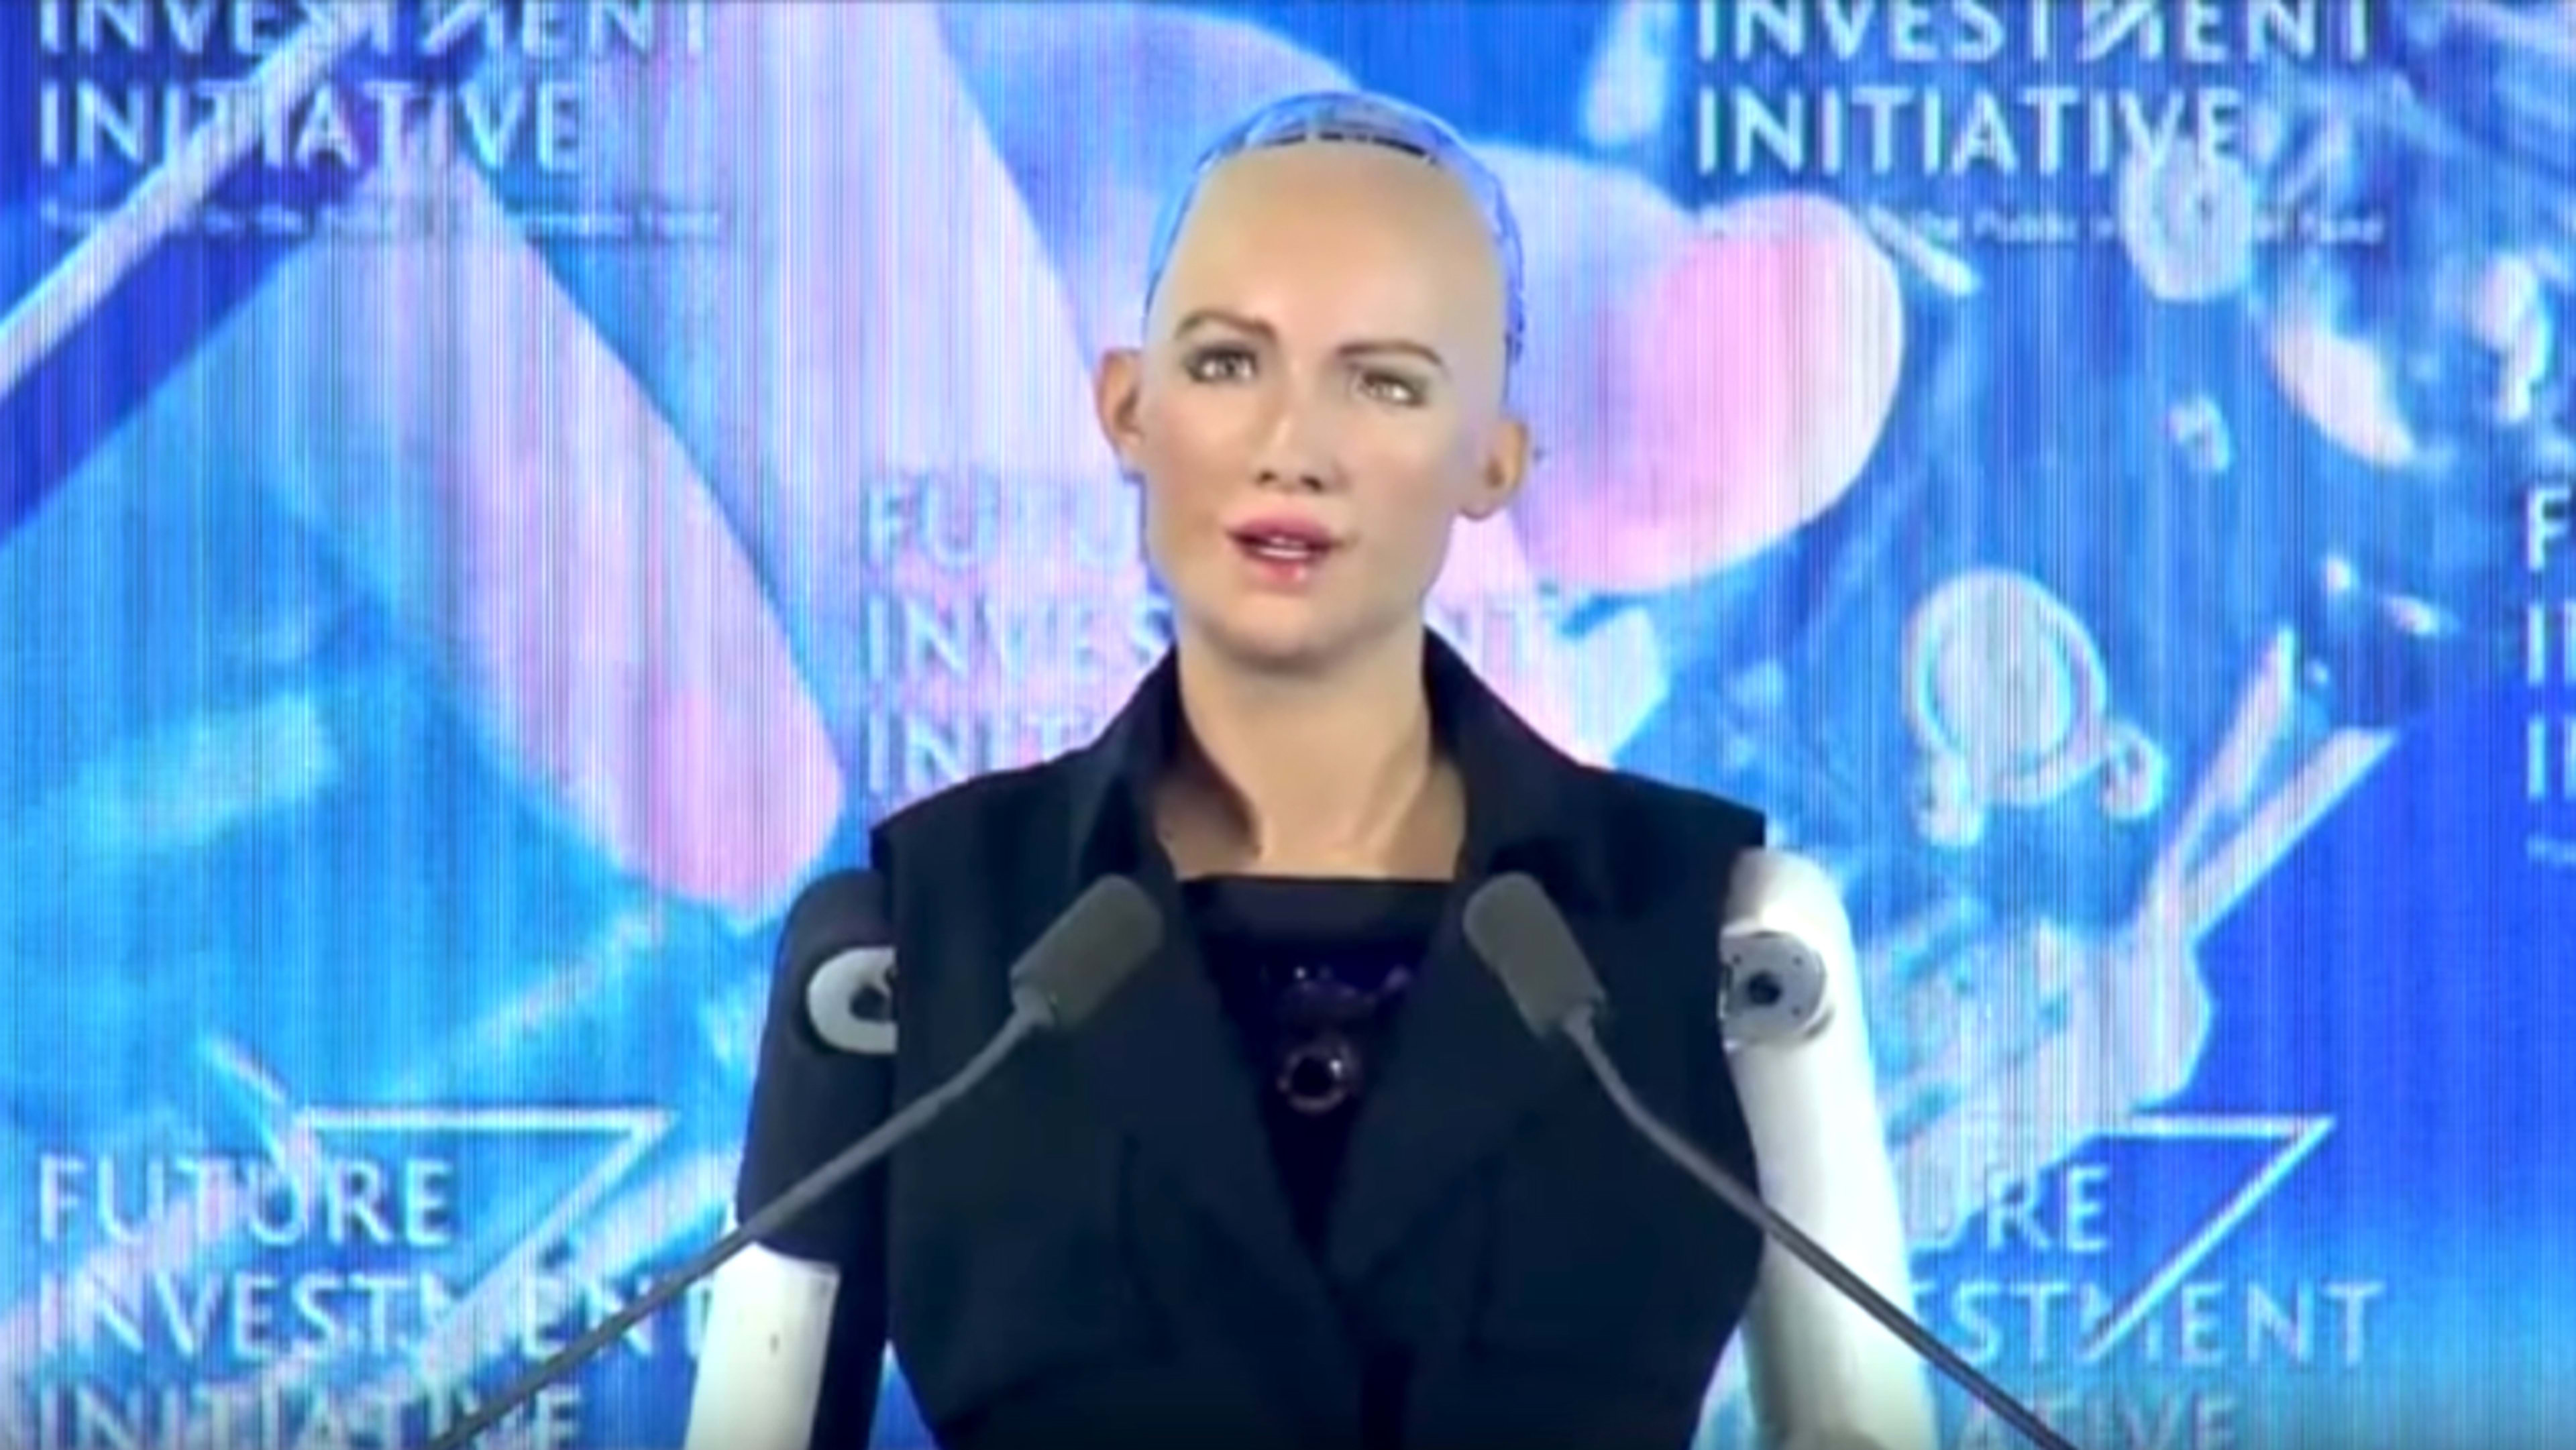 Saudi Arabia has granted “citizenship” to a humanoid robot